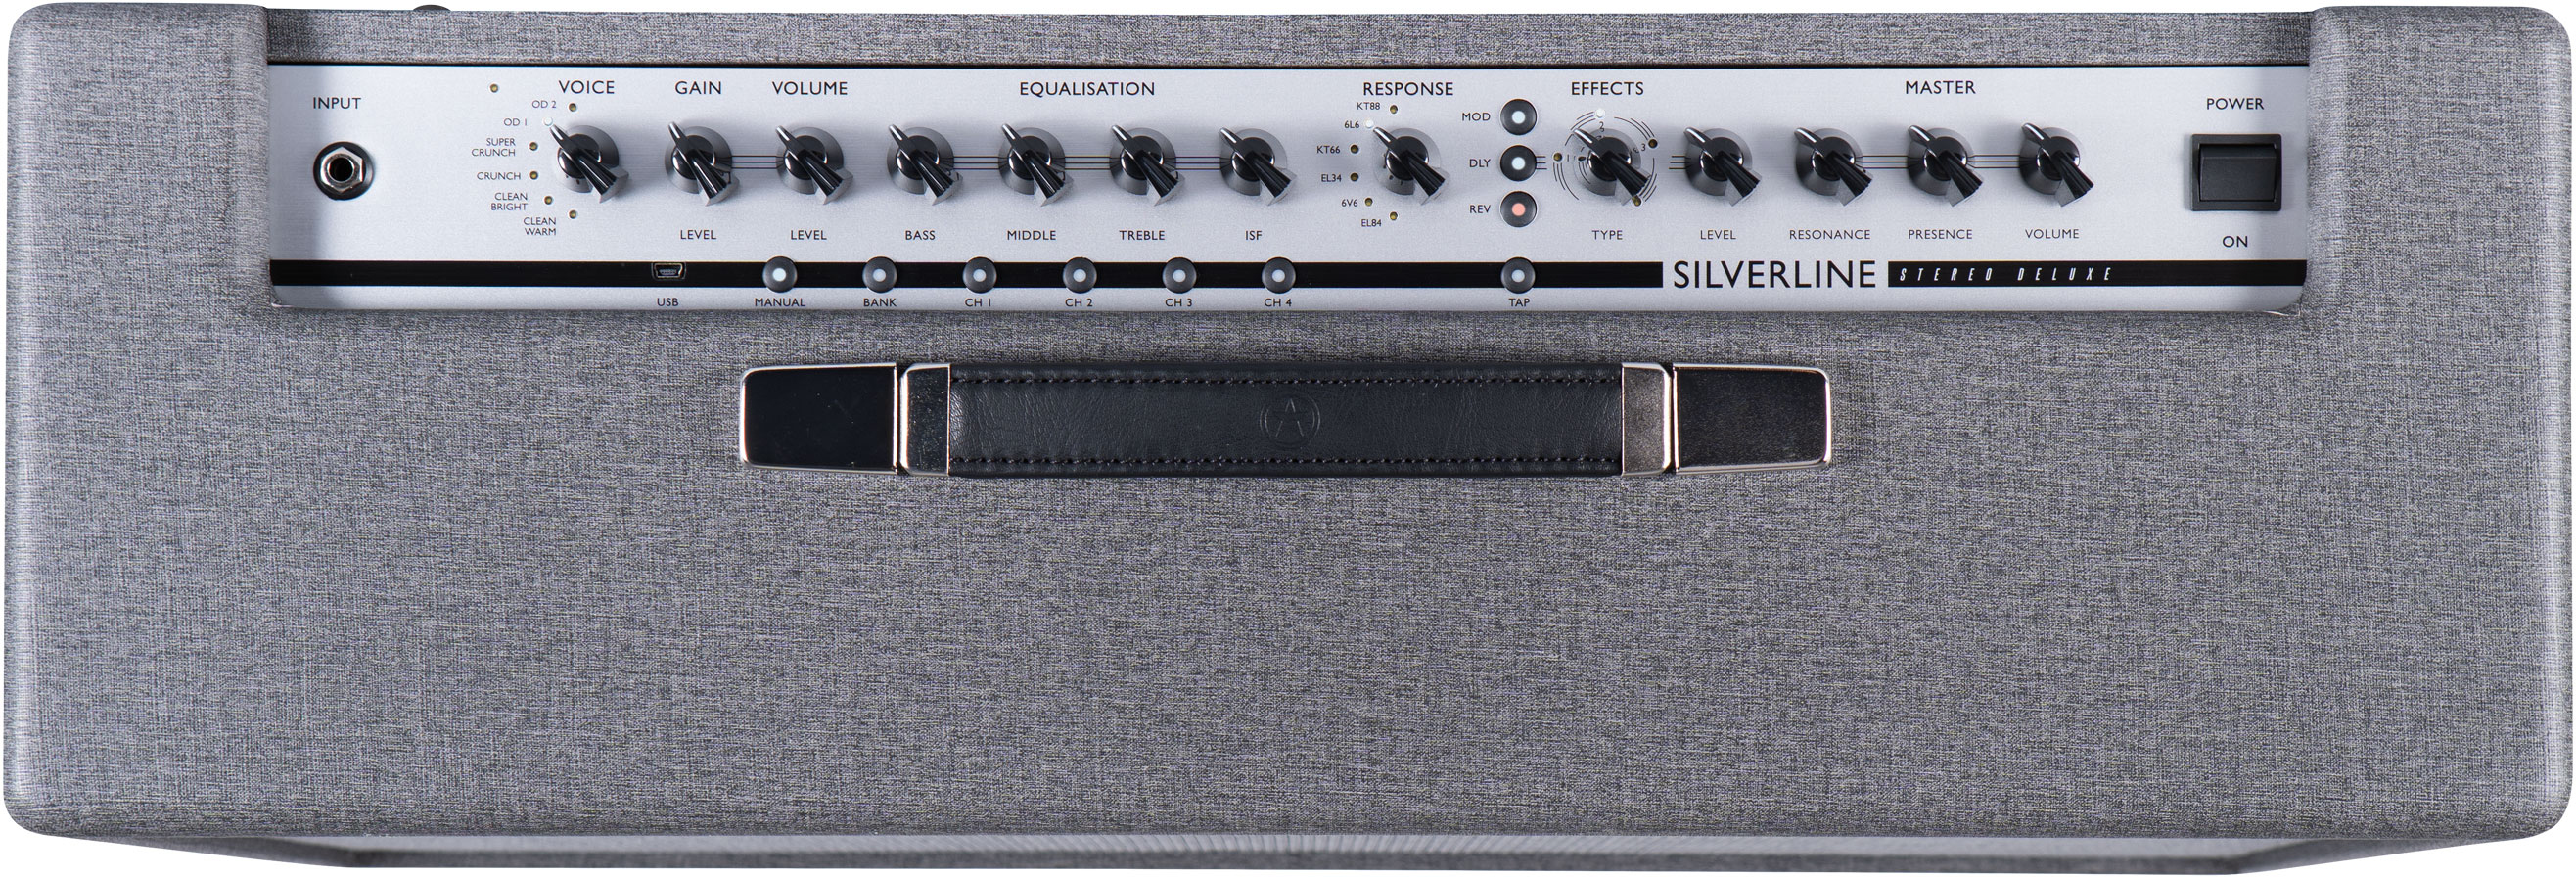 Blackstar Silverline Stereo Deluxe 2x100w 2x12 - Combo amplificador para guitarra eléctrica - Variation 3